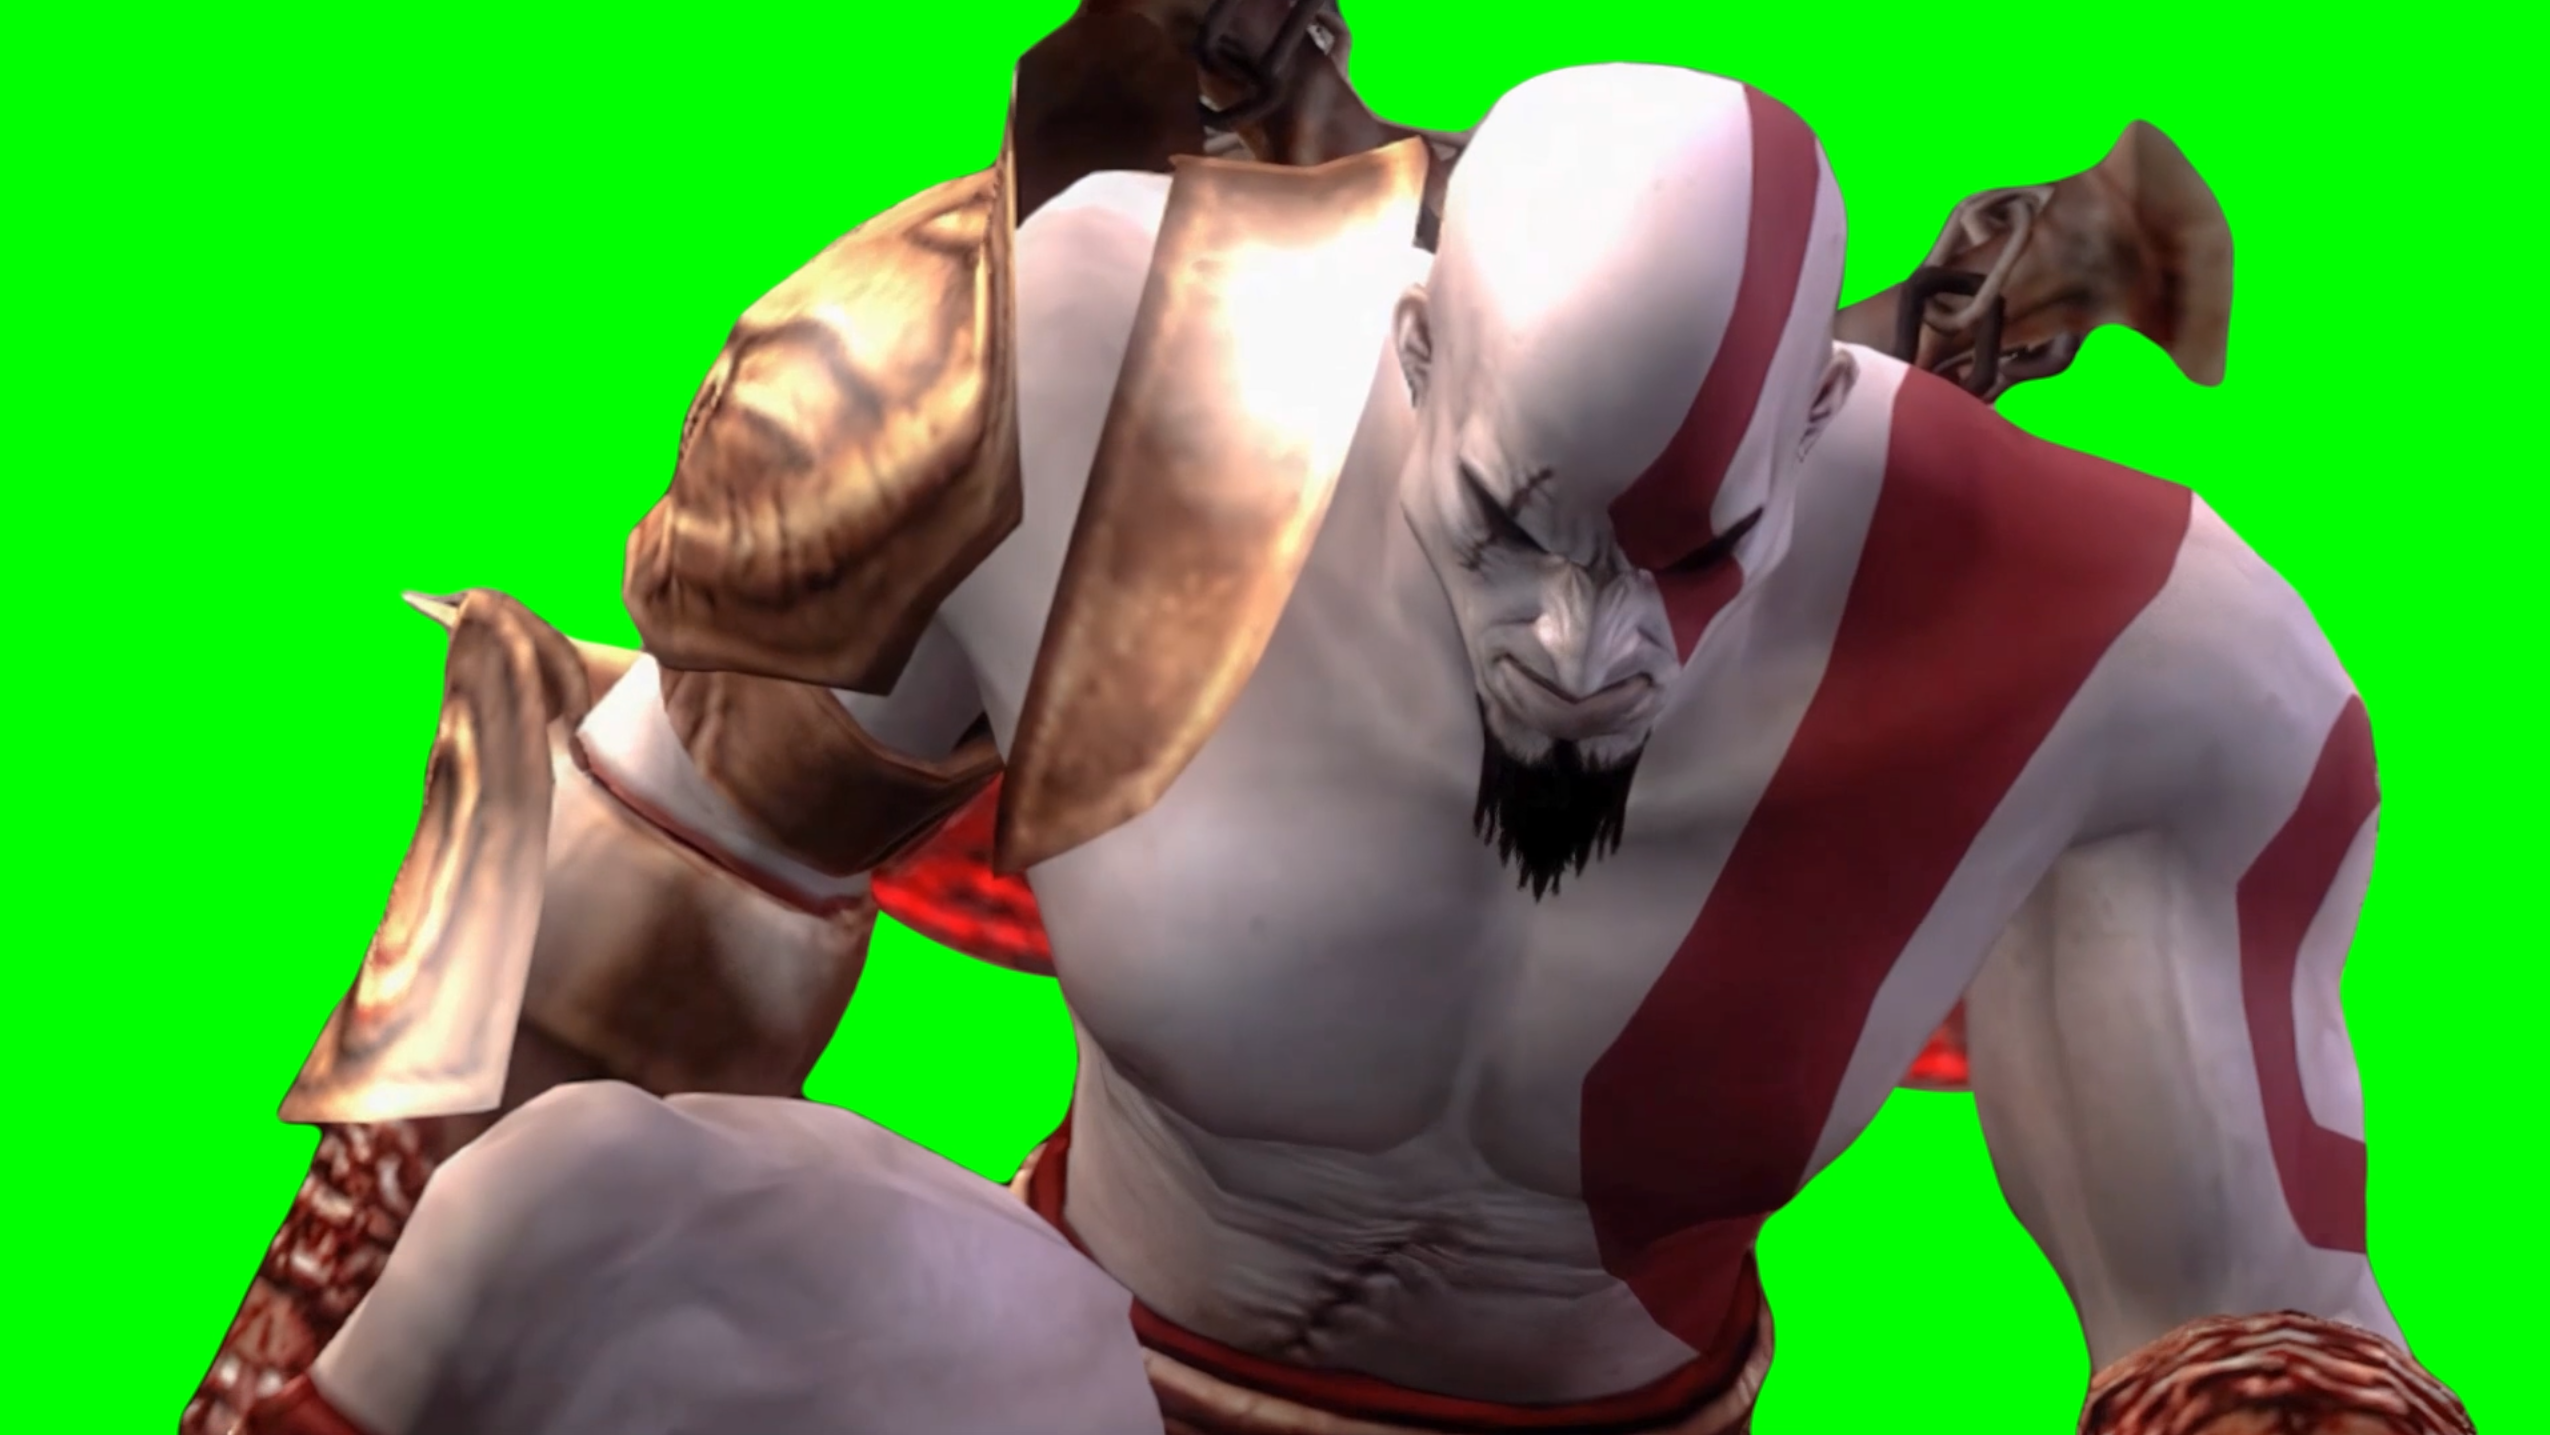 ZEUS! IS THIS HOW YOU FACE ME, COWARD?! - Kratos God of War (Green Screen)